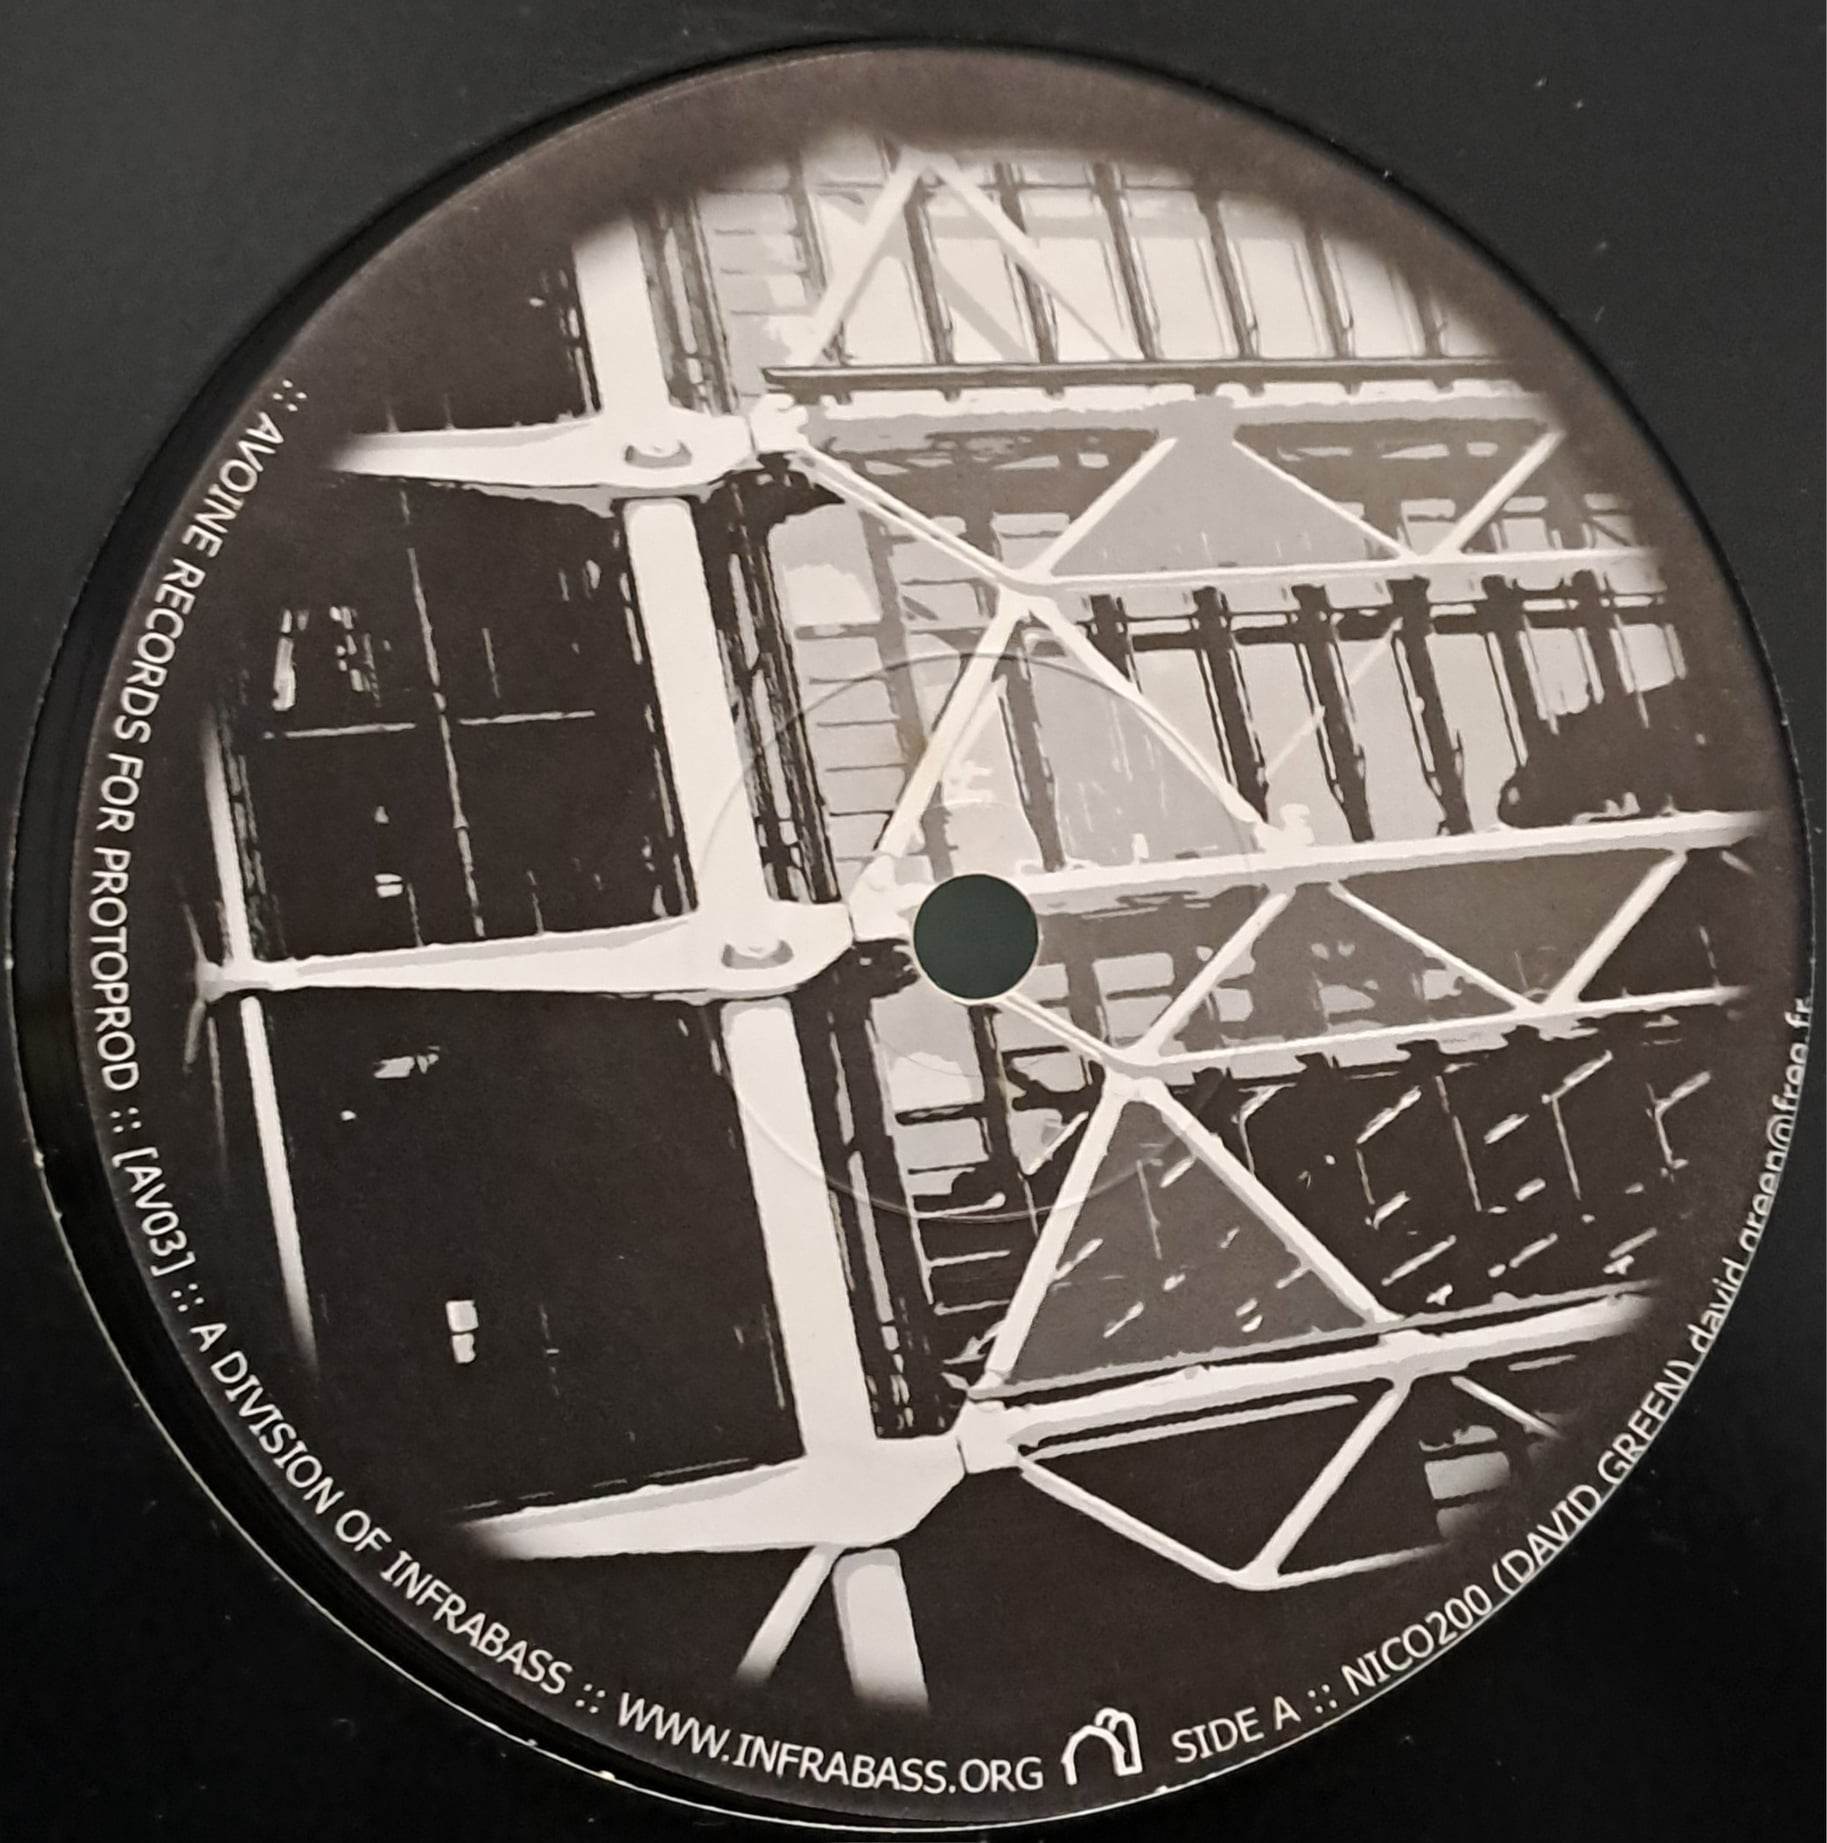 Avoine 003 - vinyle hardcore